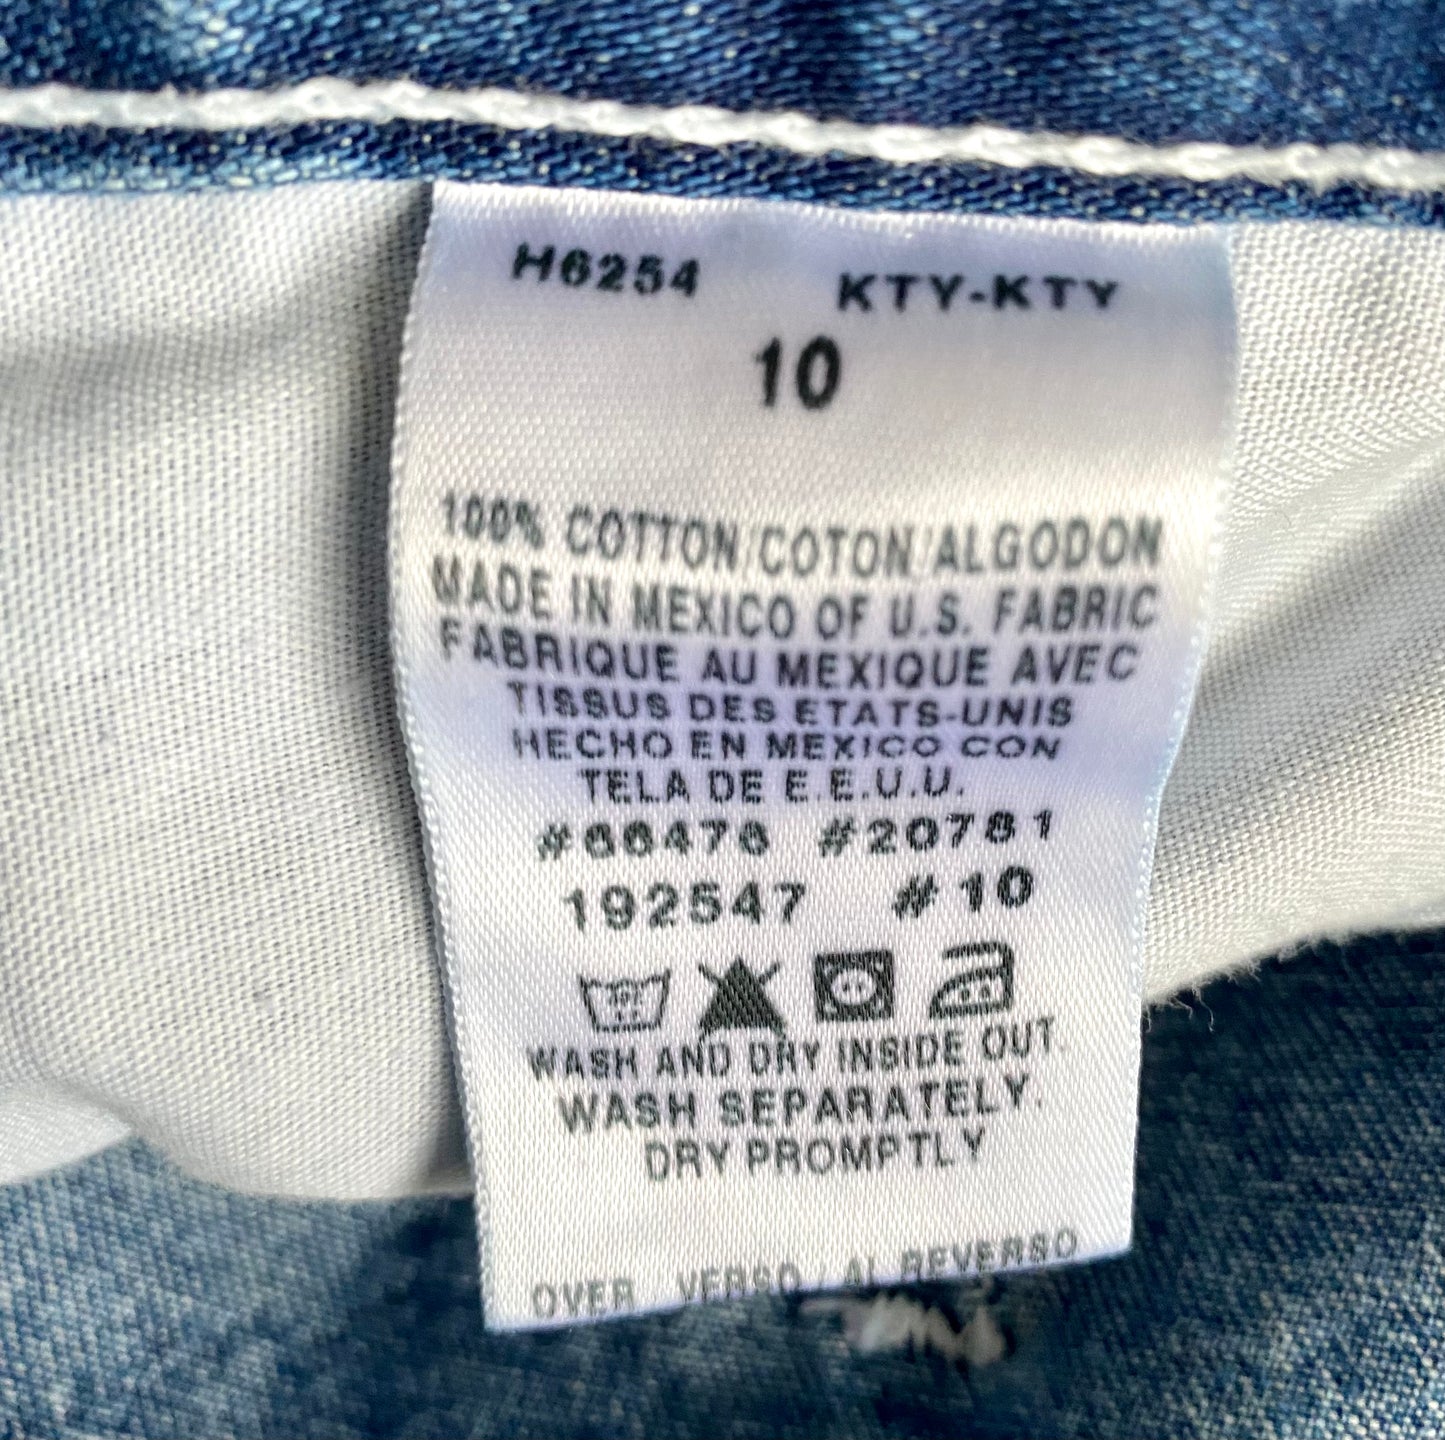 1990s Tommy Hilfiger Jeans